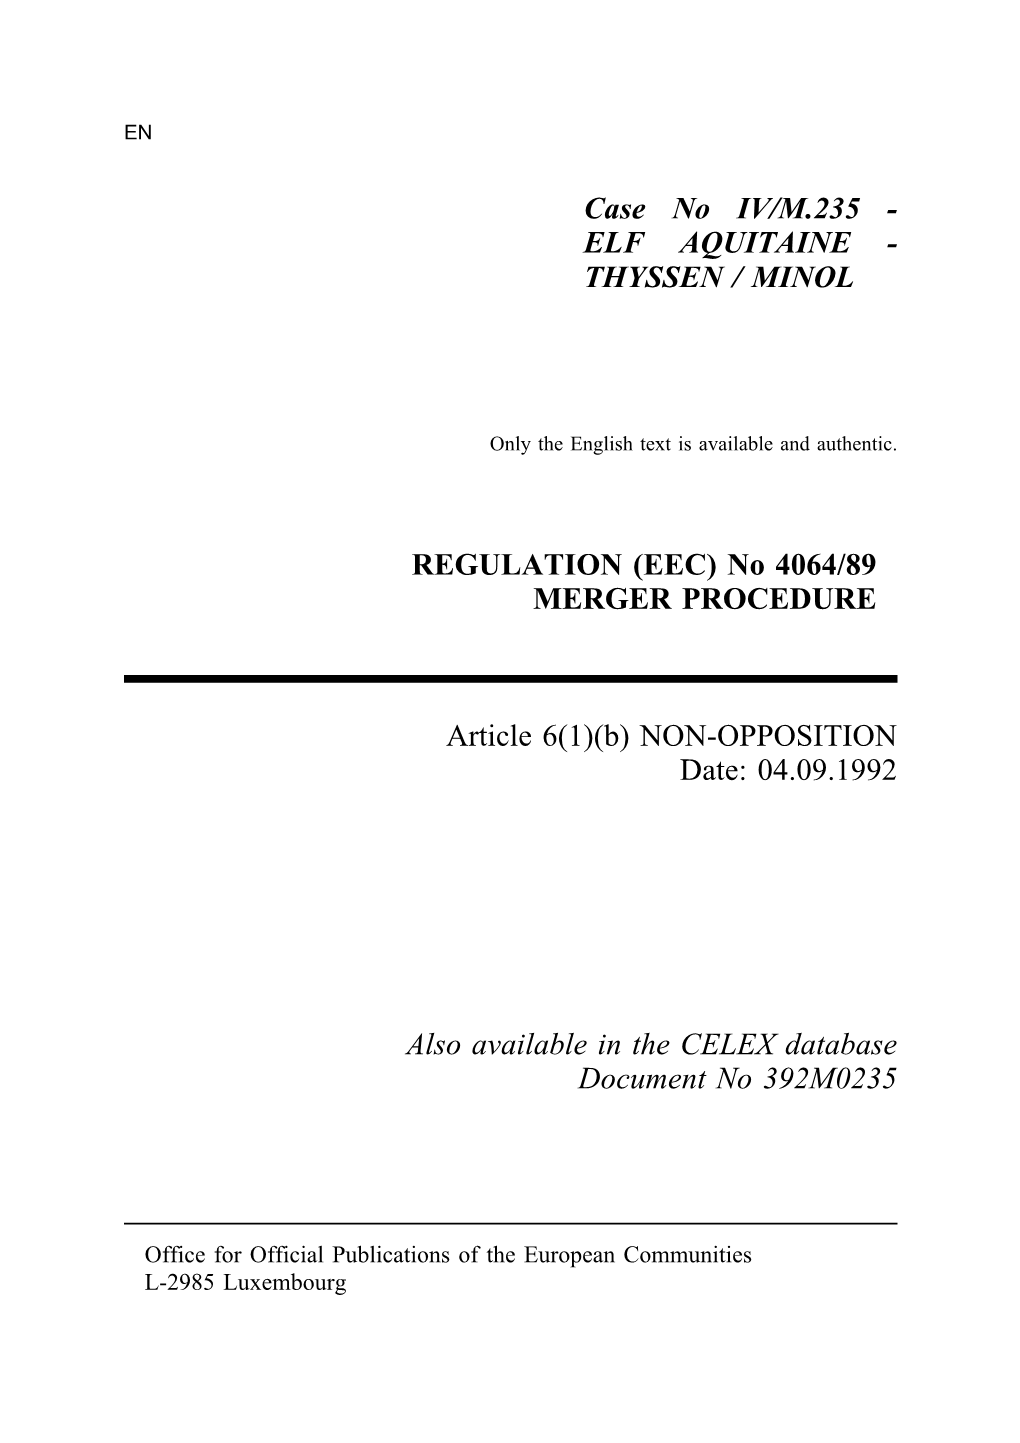 Merger Decision IV/M.235 of 04.09.1992